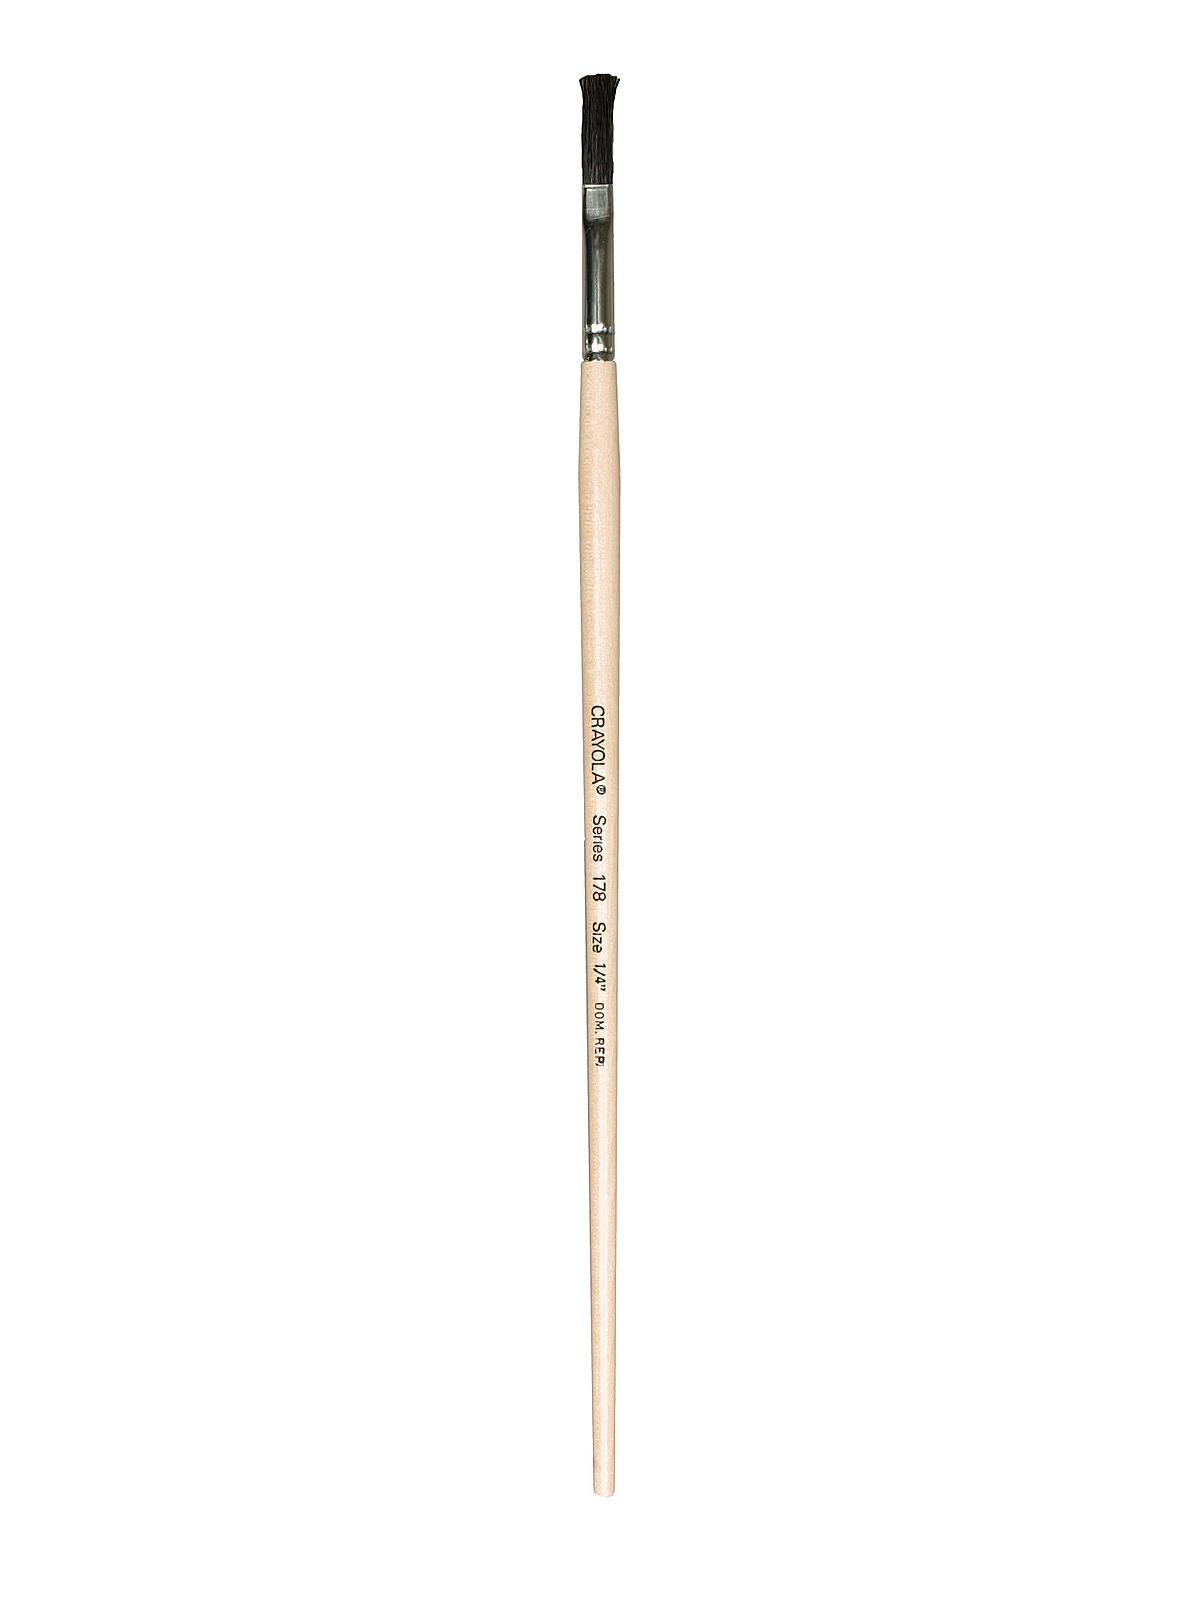 Series 178 Long Handled Black Bristle Brushes 1 4 In.